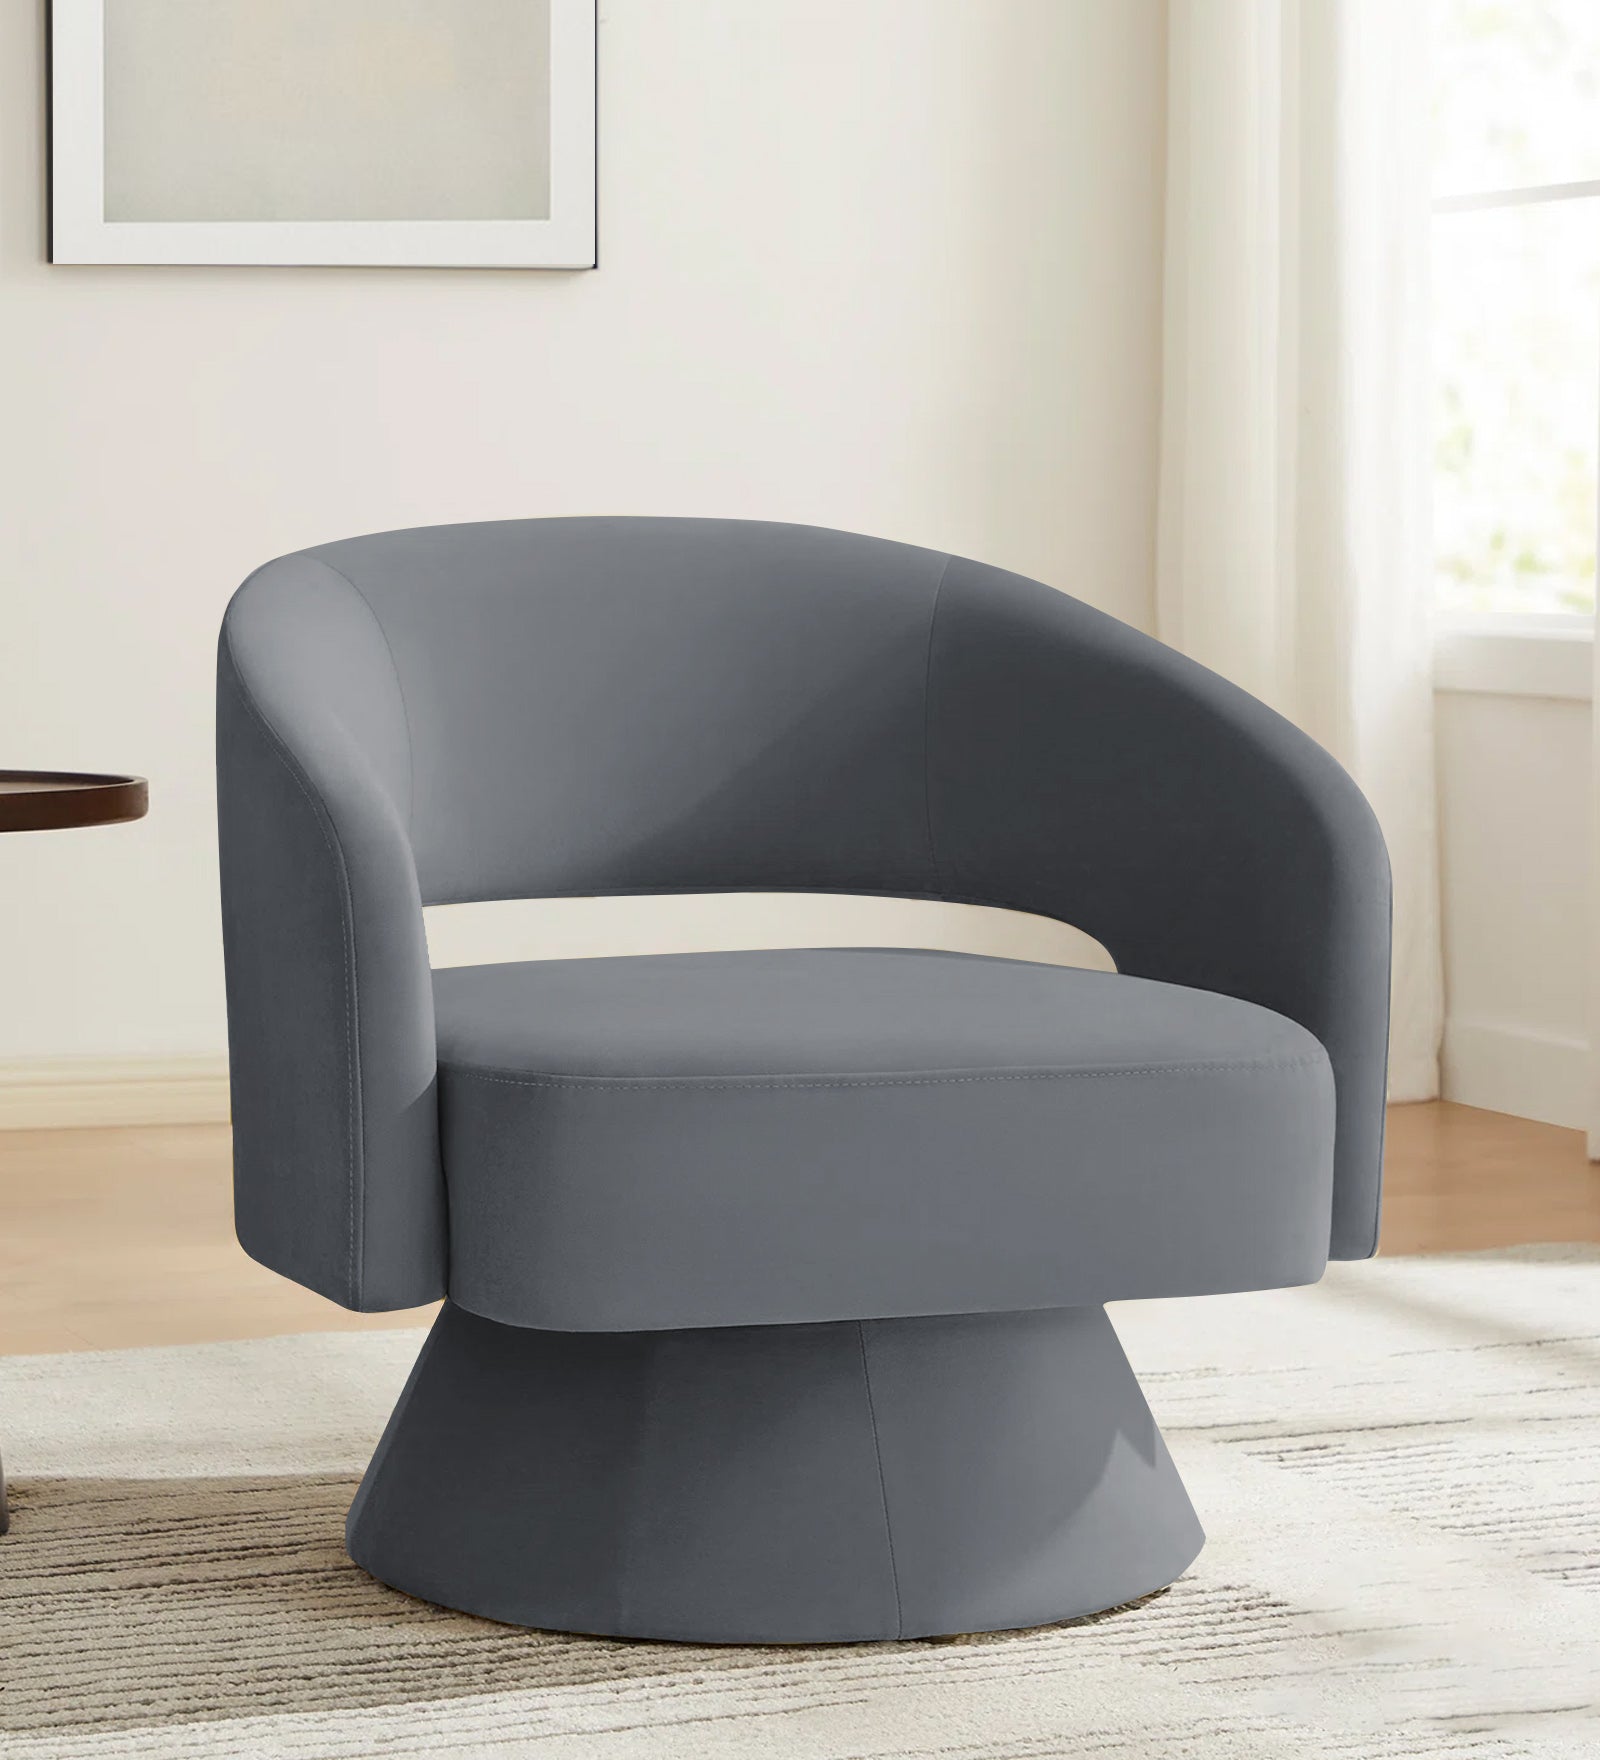 Pendra Velvet Swivel Chair in Pubble Grey Colour